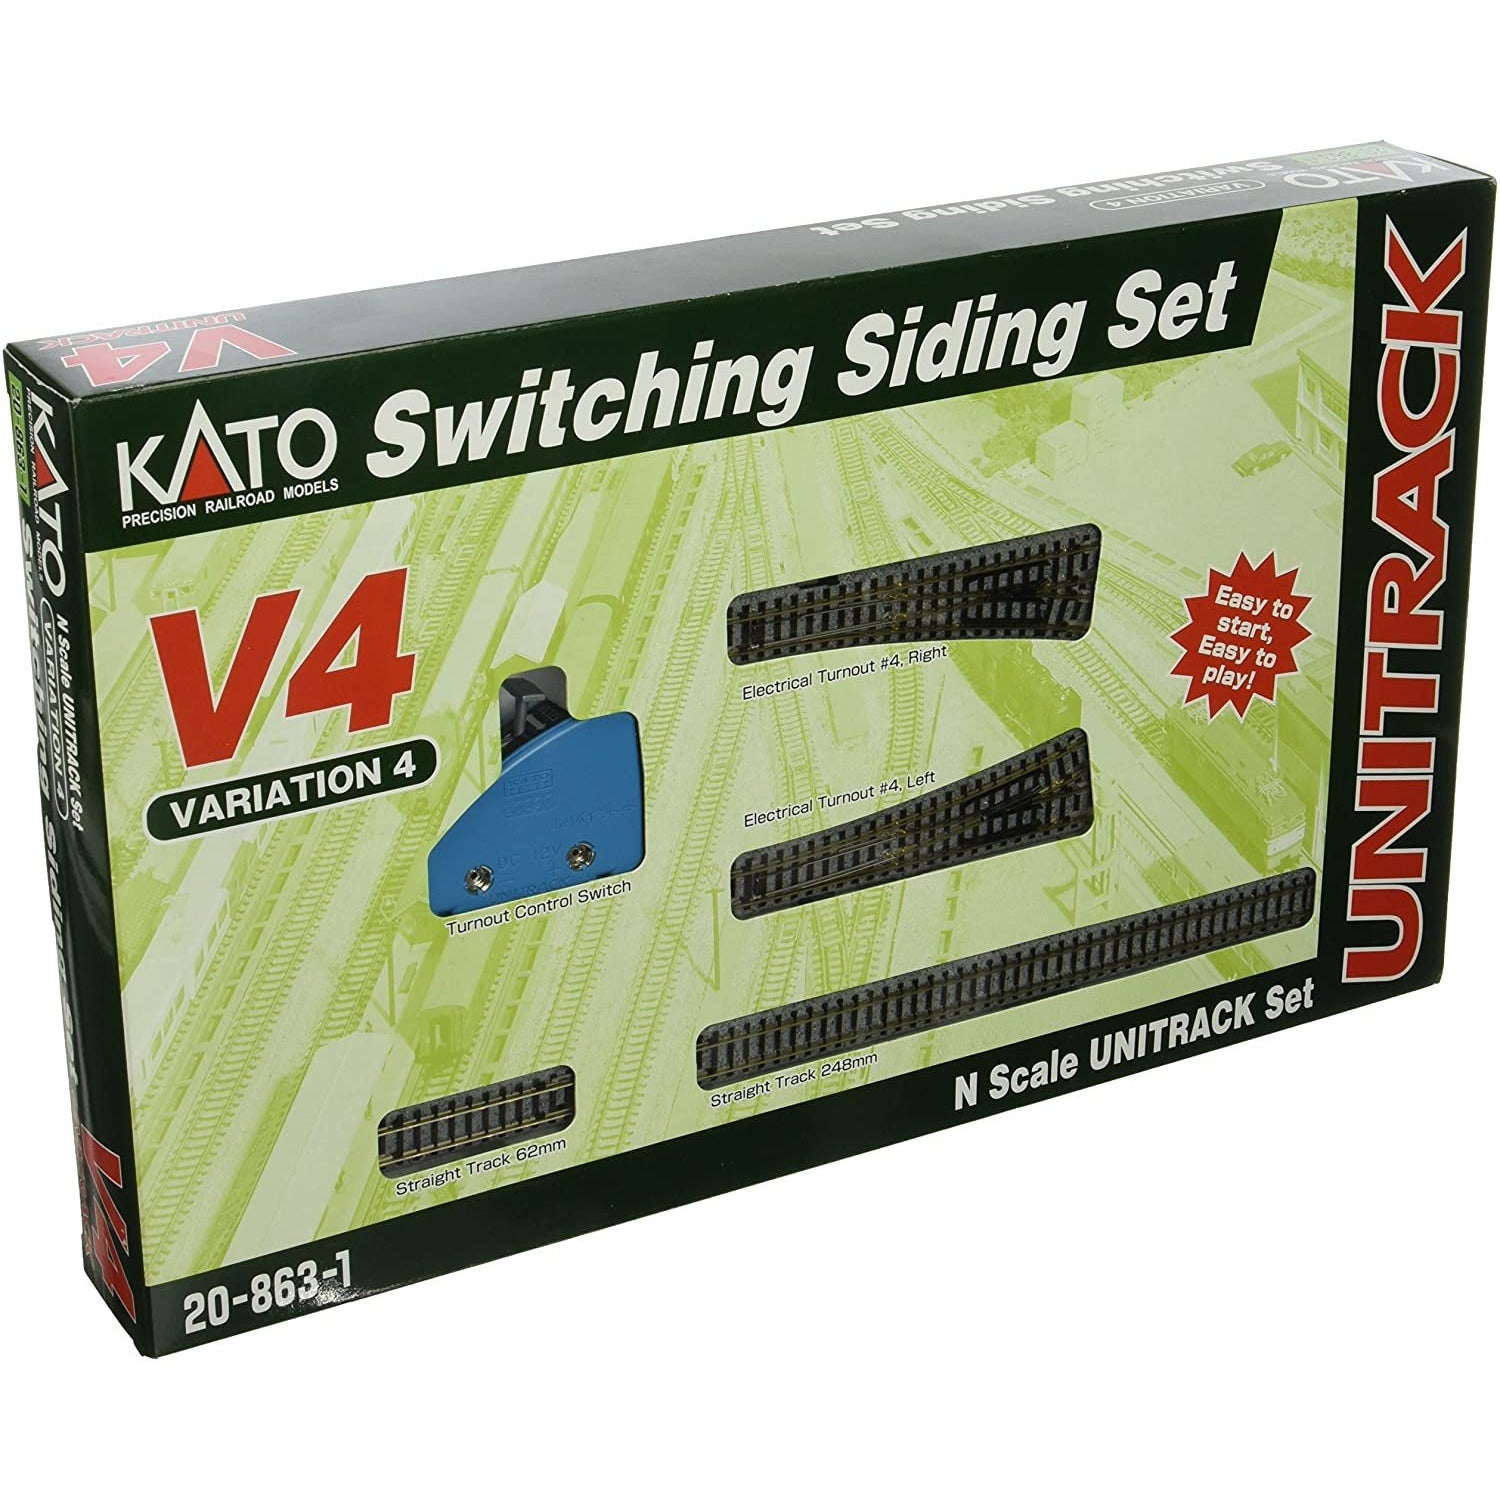 Kato UniTrack N V4 Set Switching Siding Set